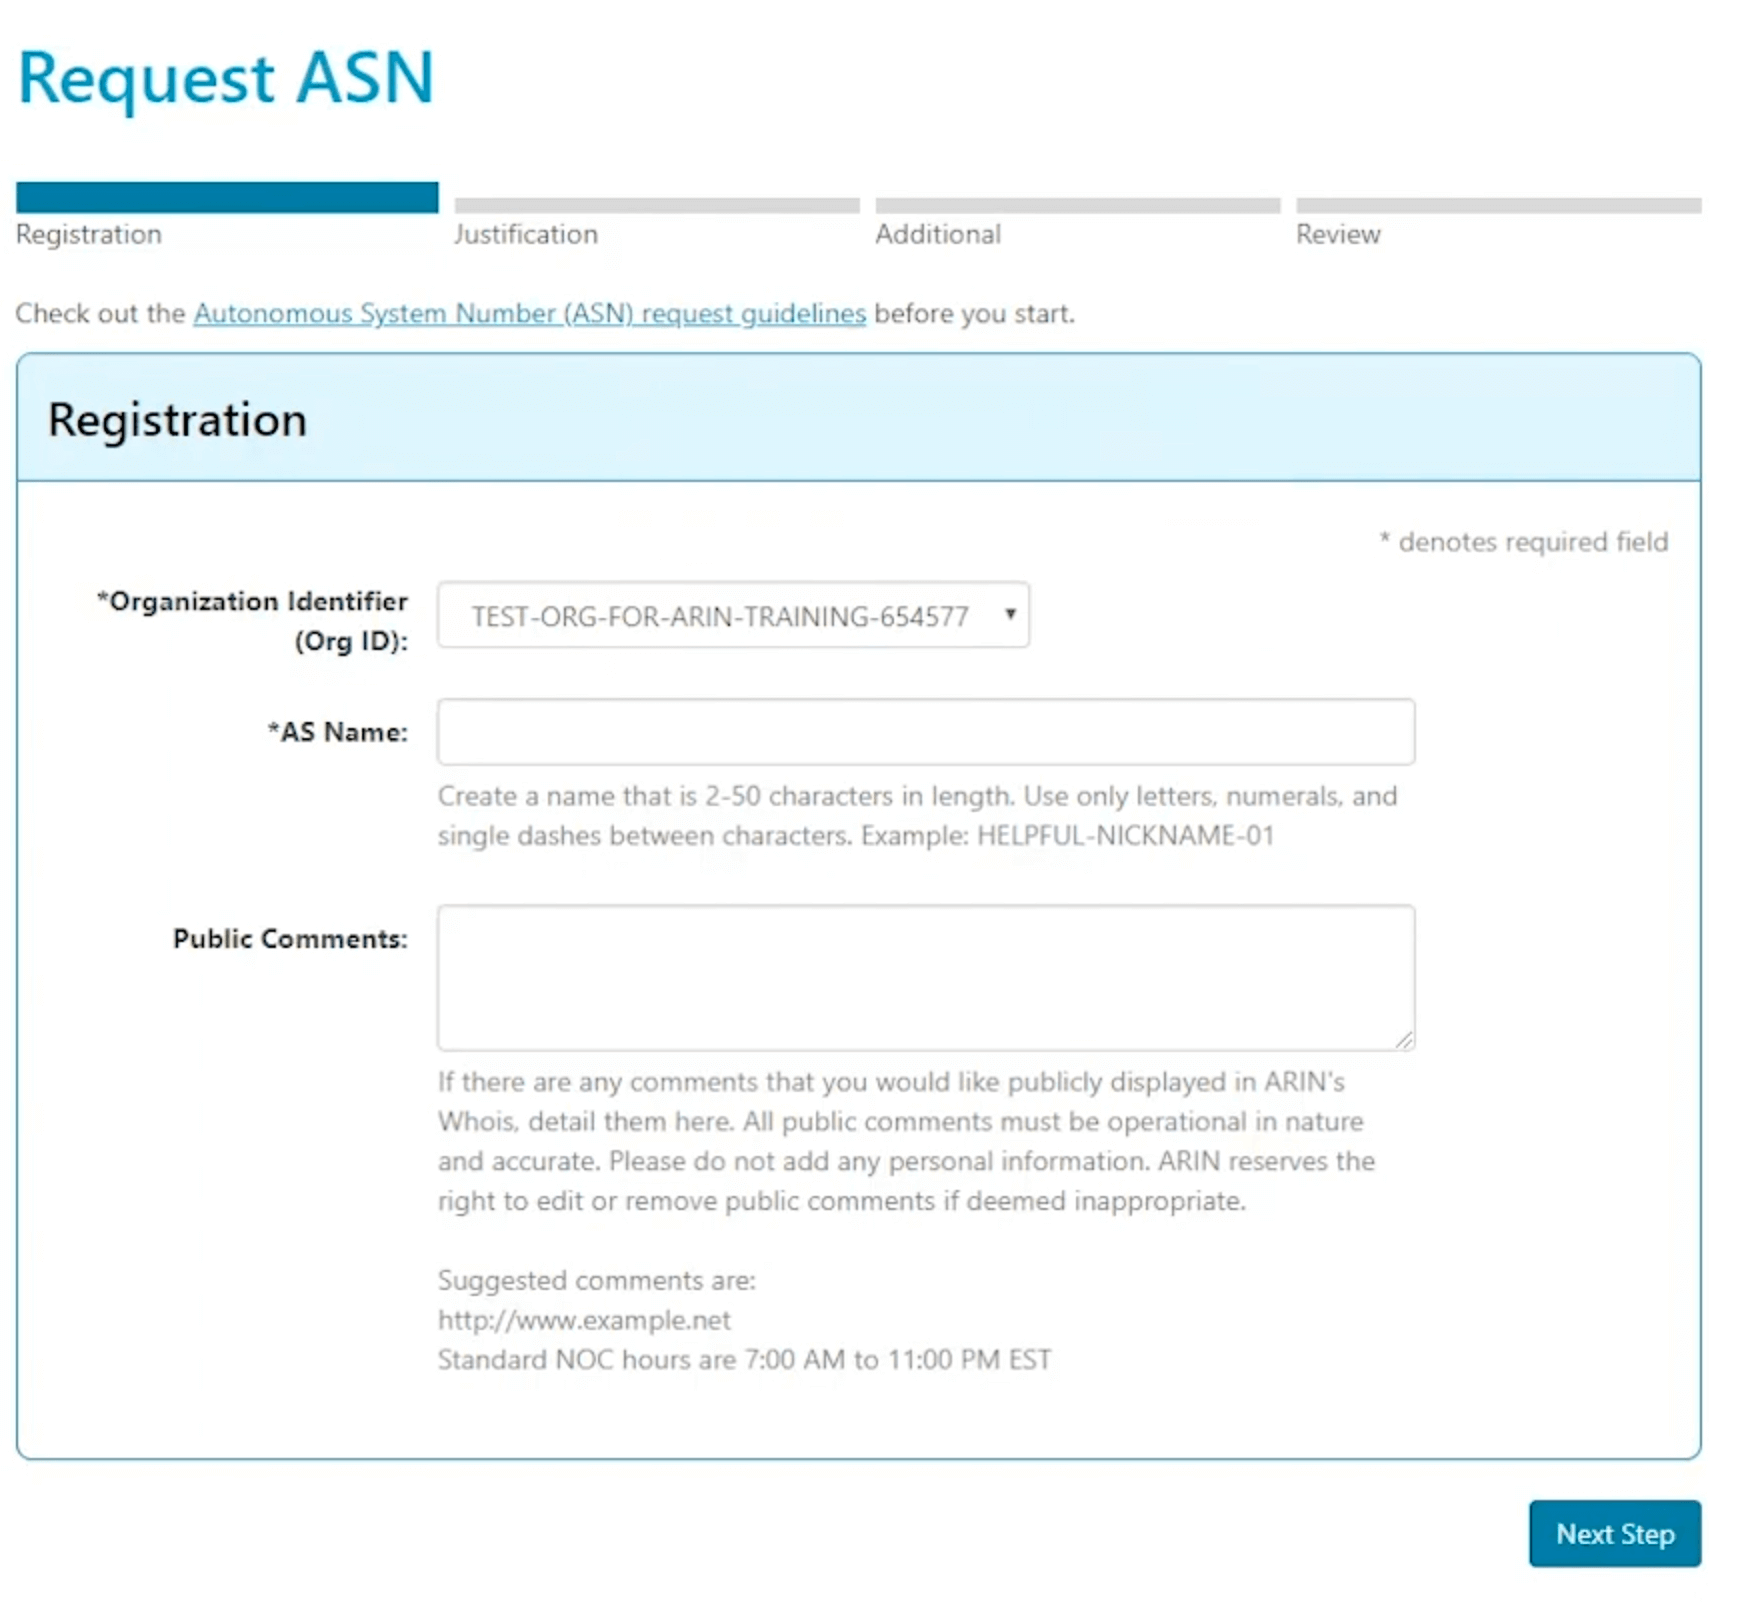 arin-asn-request-guide_request-asn-registration.png